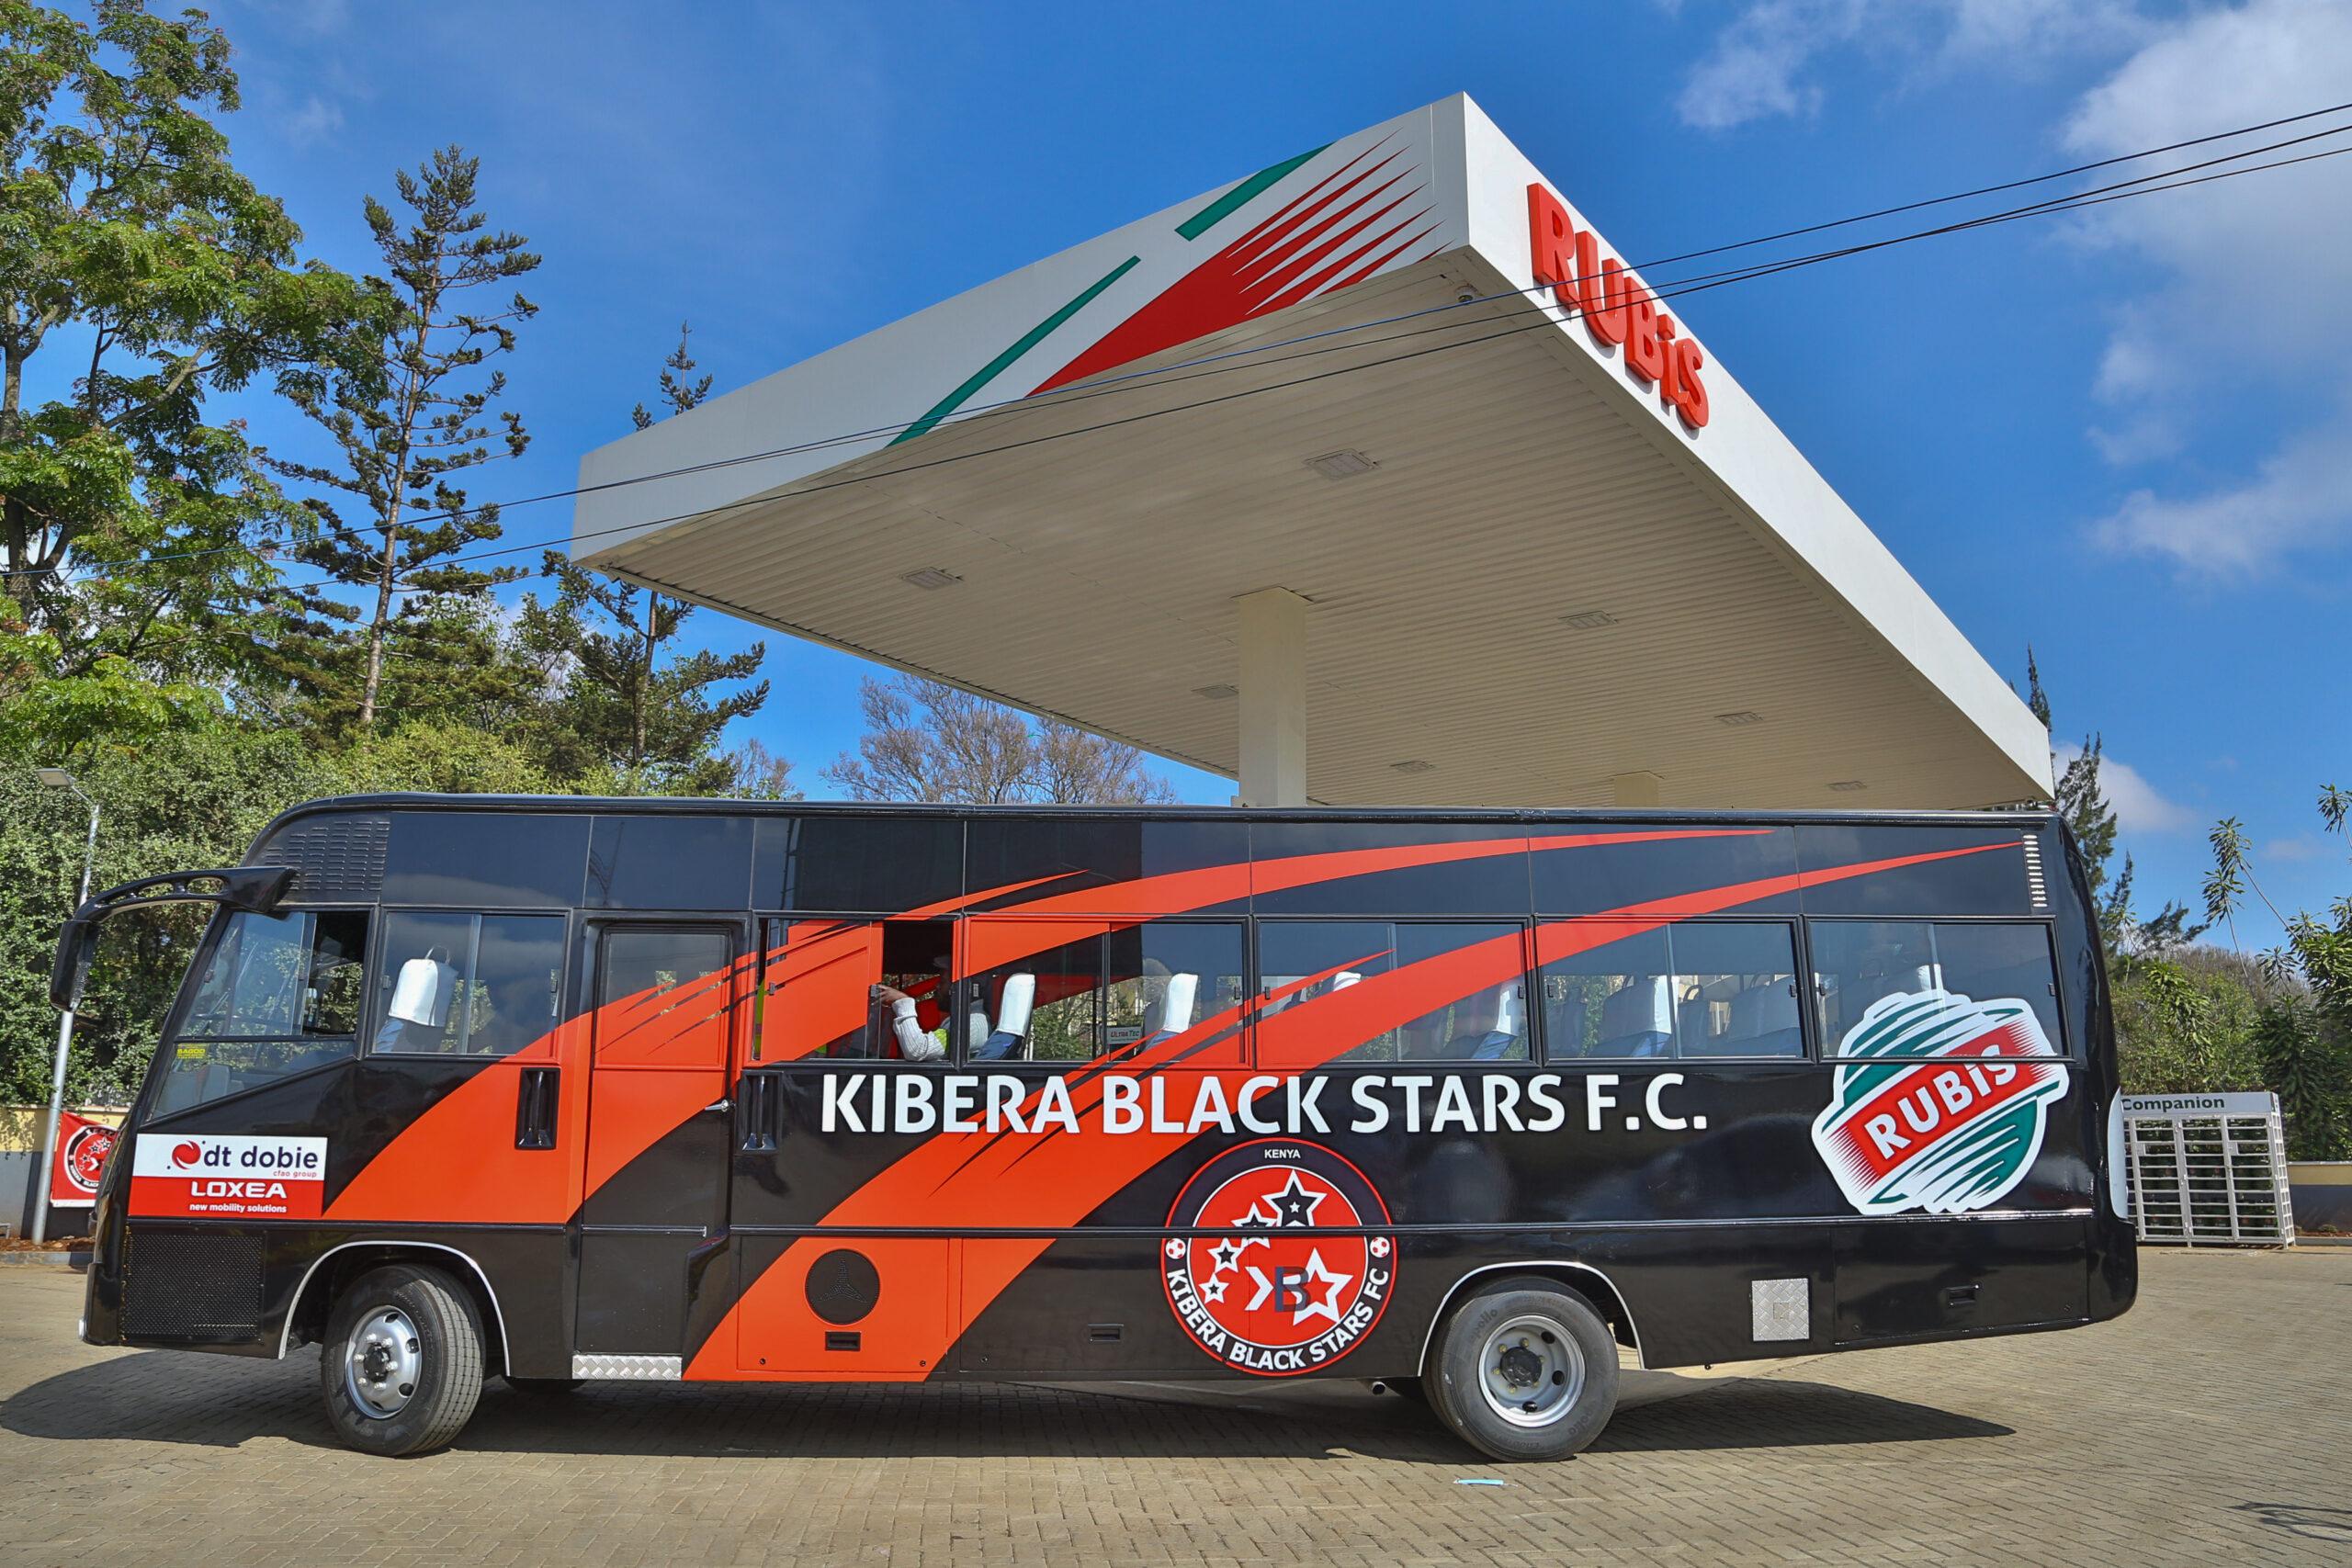 KIBERA BLACK STARS f.c bus sponsored by Rubis Kenya